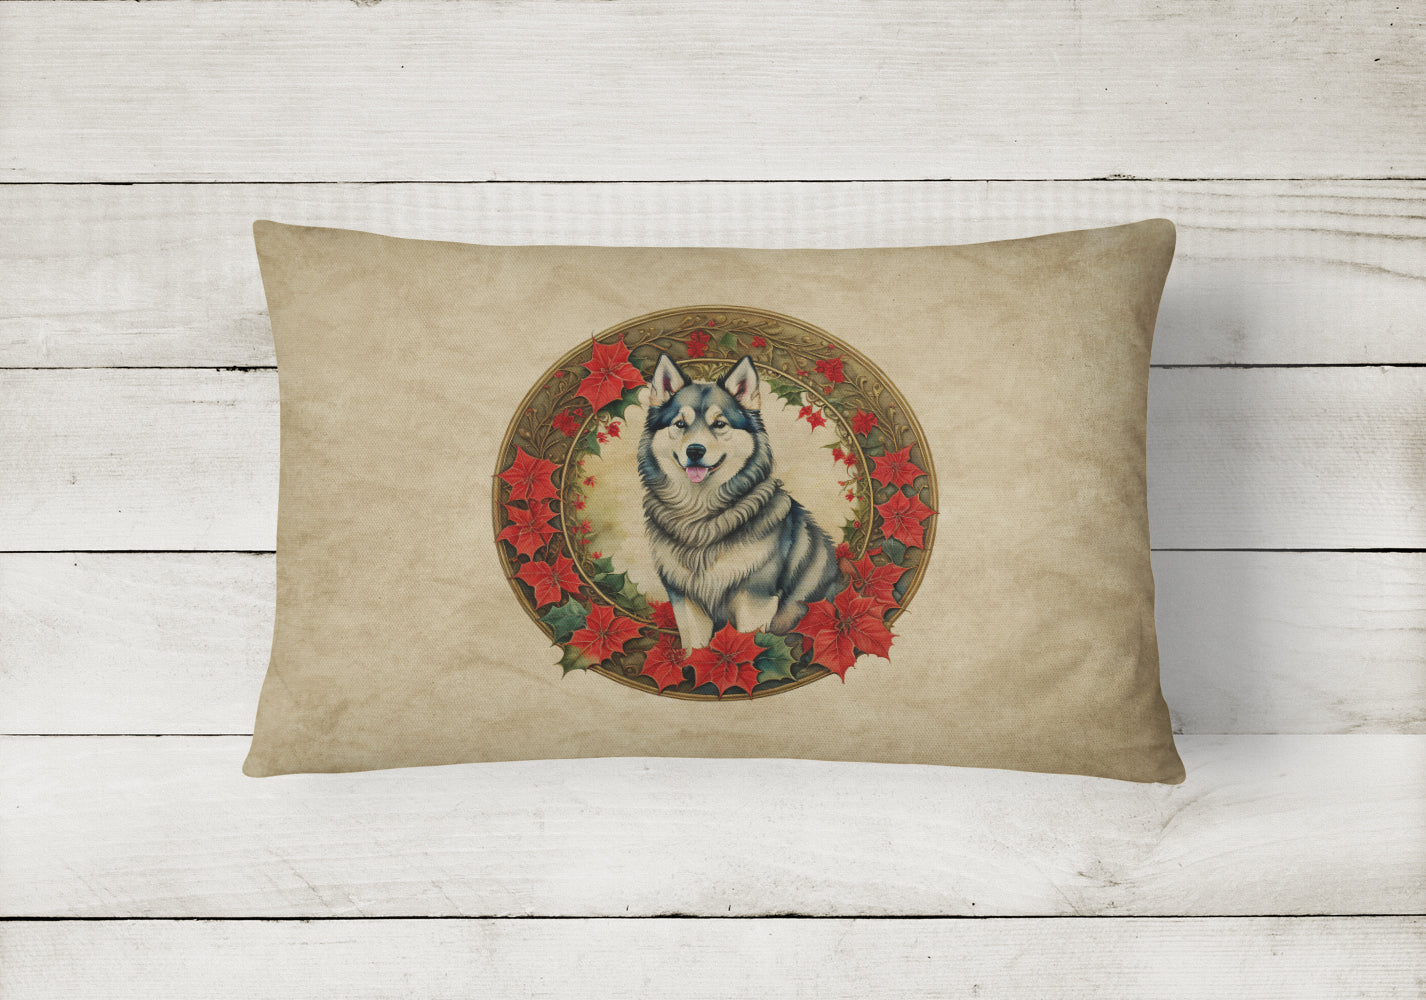 Buy this Alaskan Malamute Christmas Flowers Throw Pillow